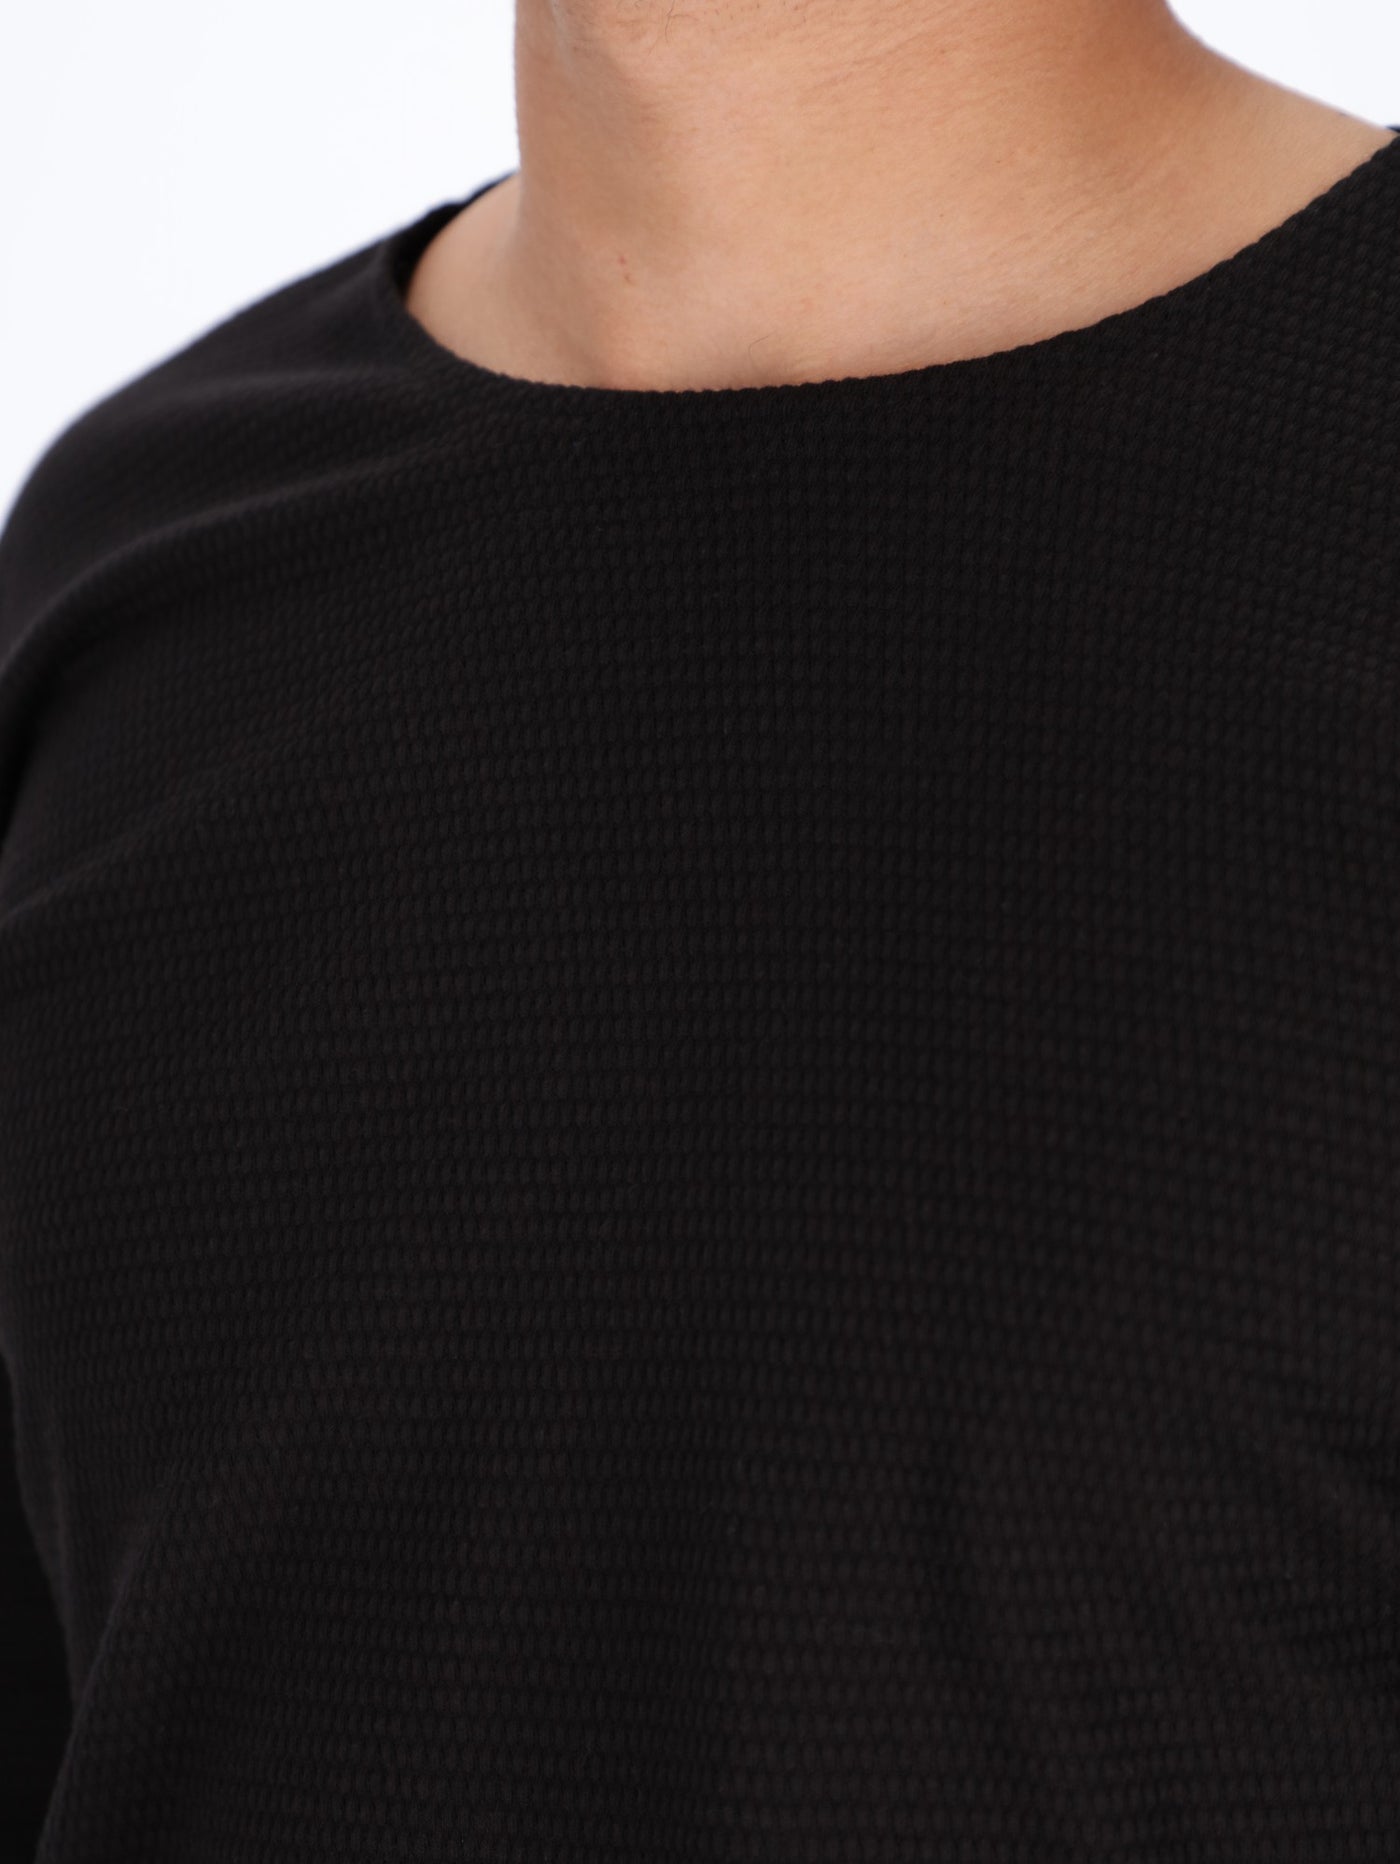 Basic Textured Long Sleeve T-Shirt